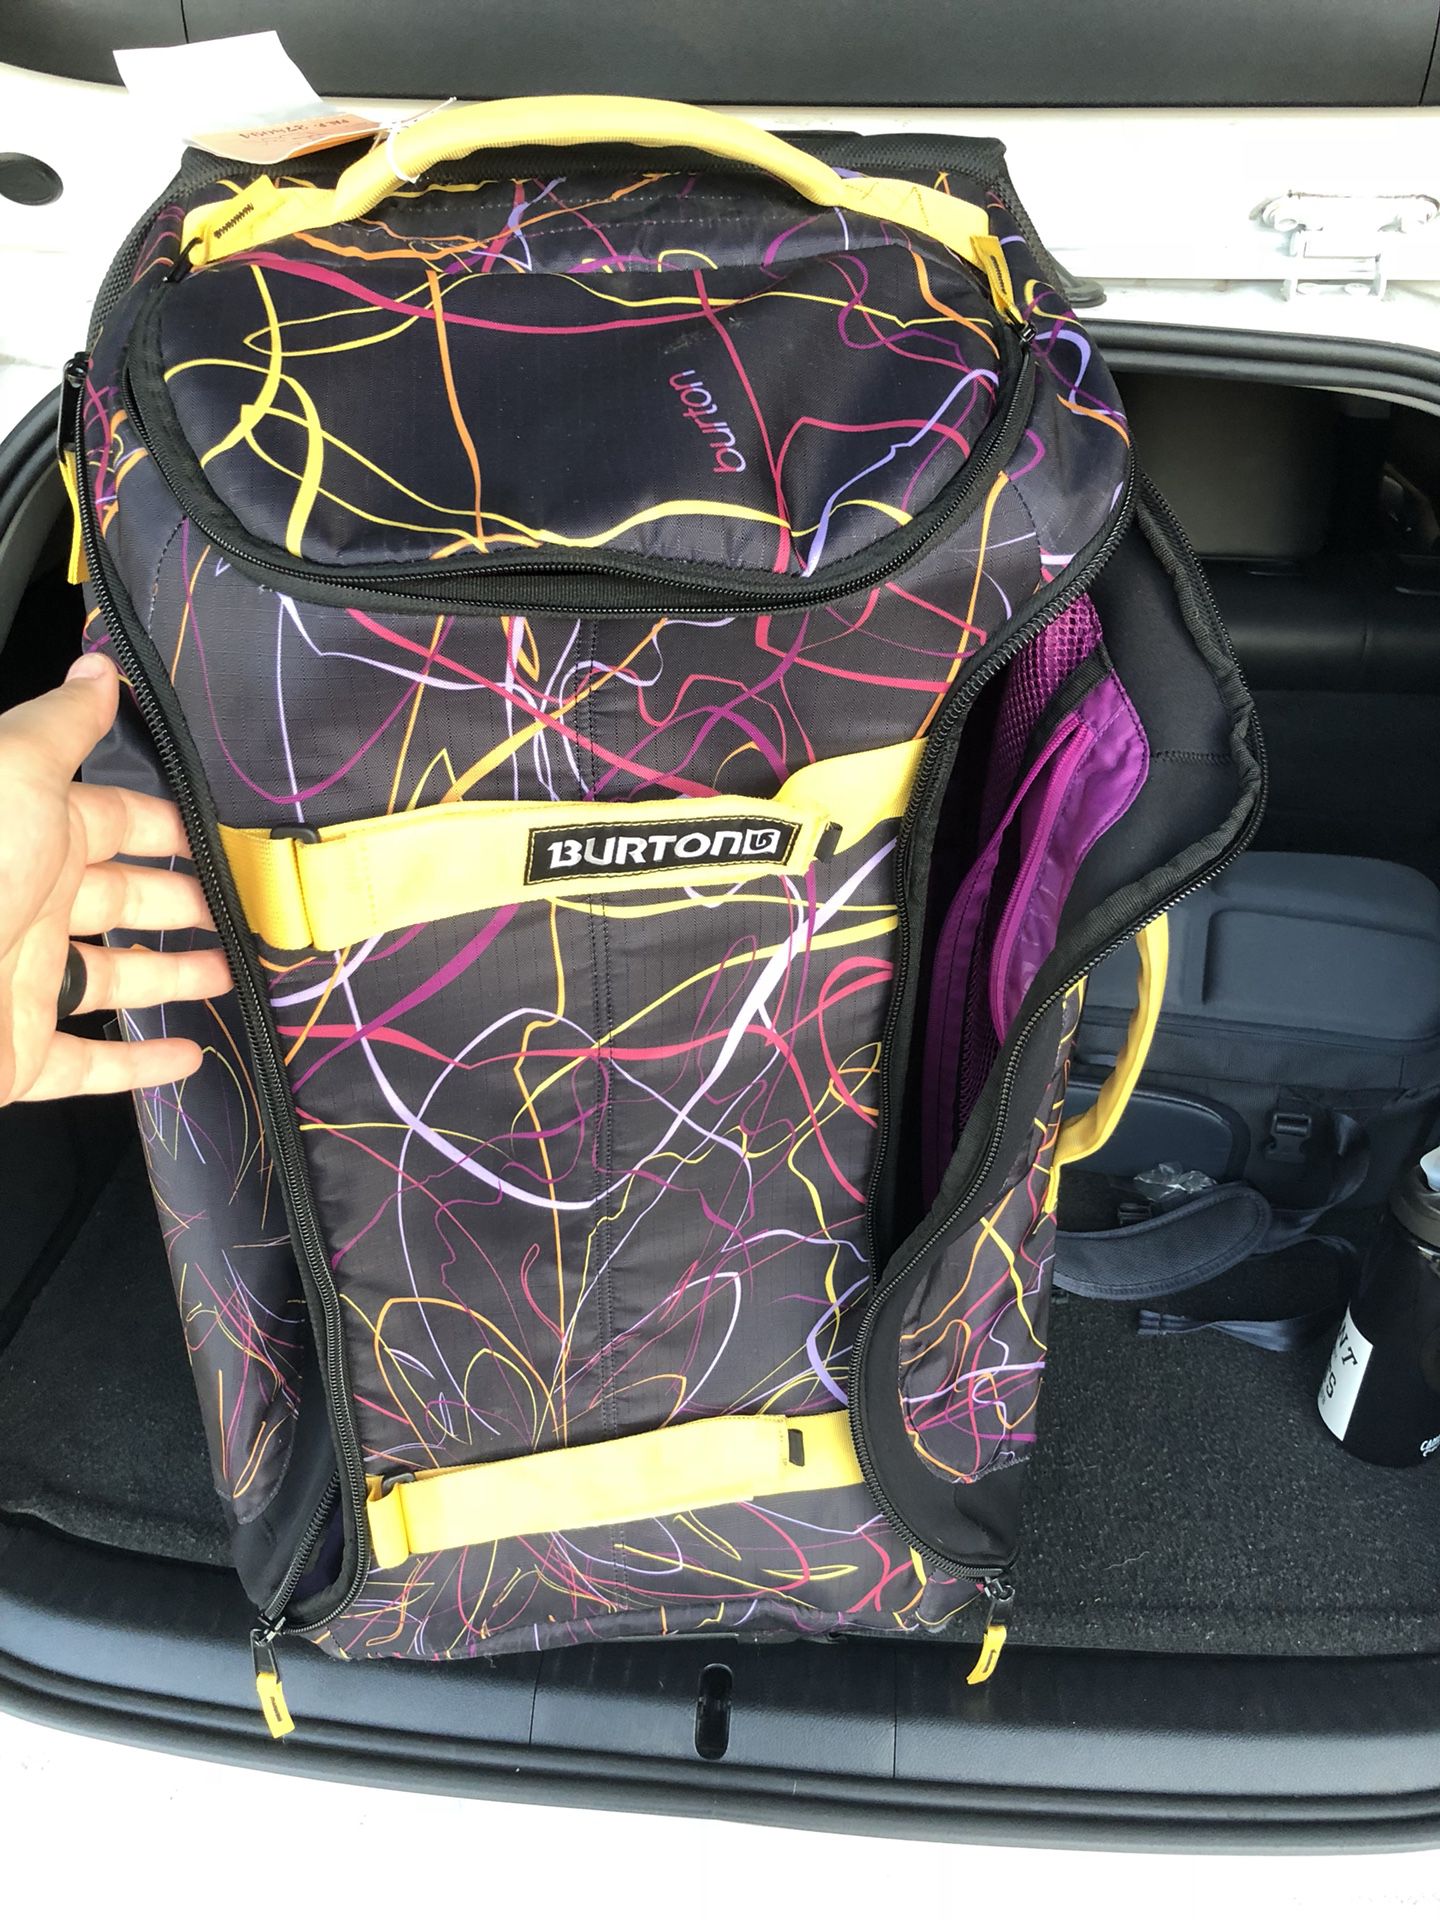 Burton luggage snowboard bag